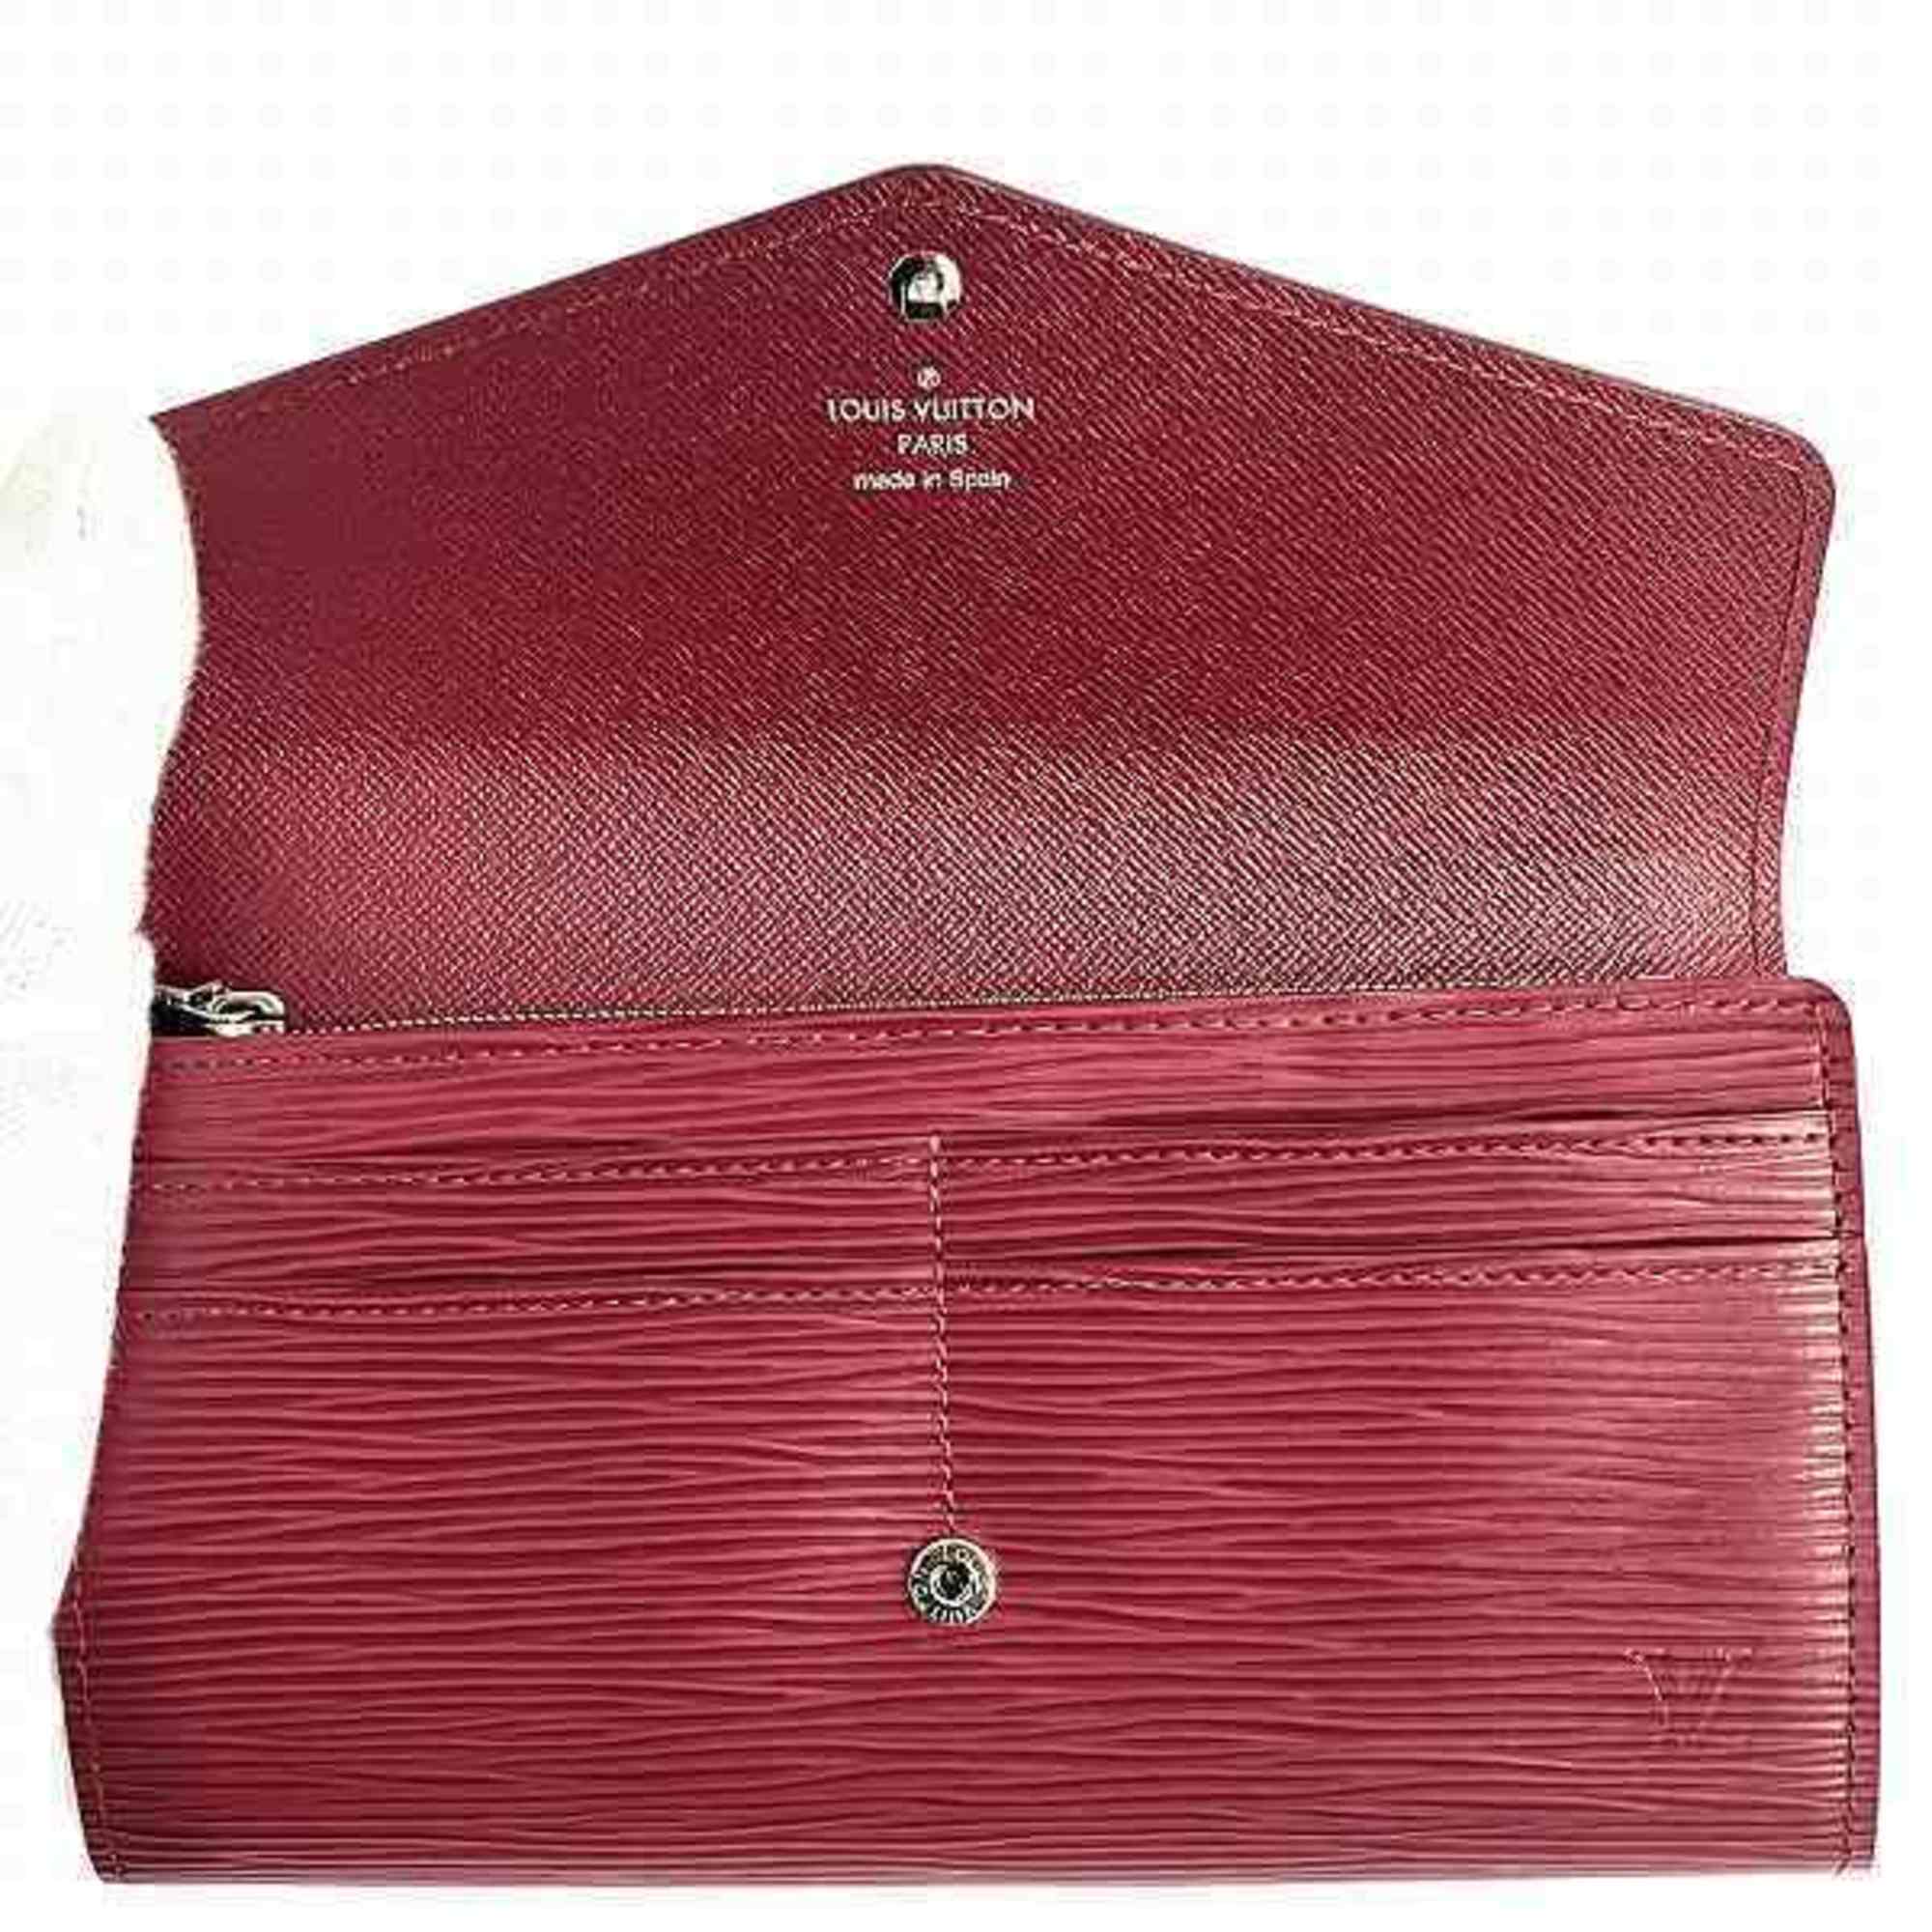 Louis Vuitton Epi Portefeuille Sarah M41958 Hot Pink Long Wallet Bi-fold for Women